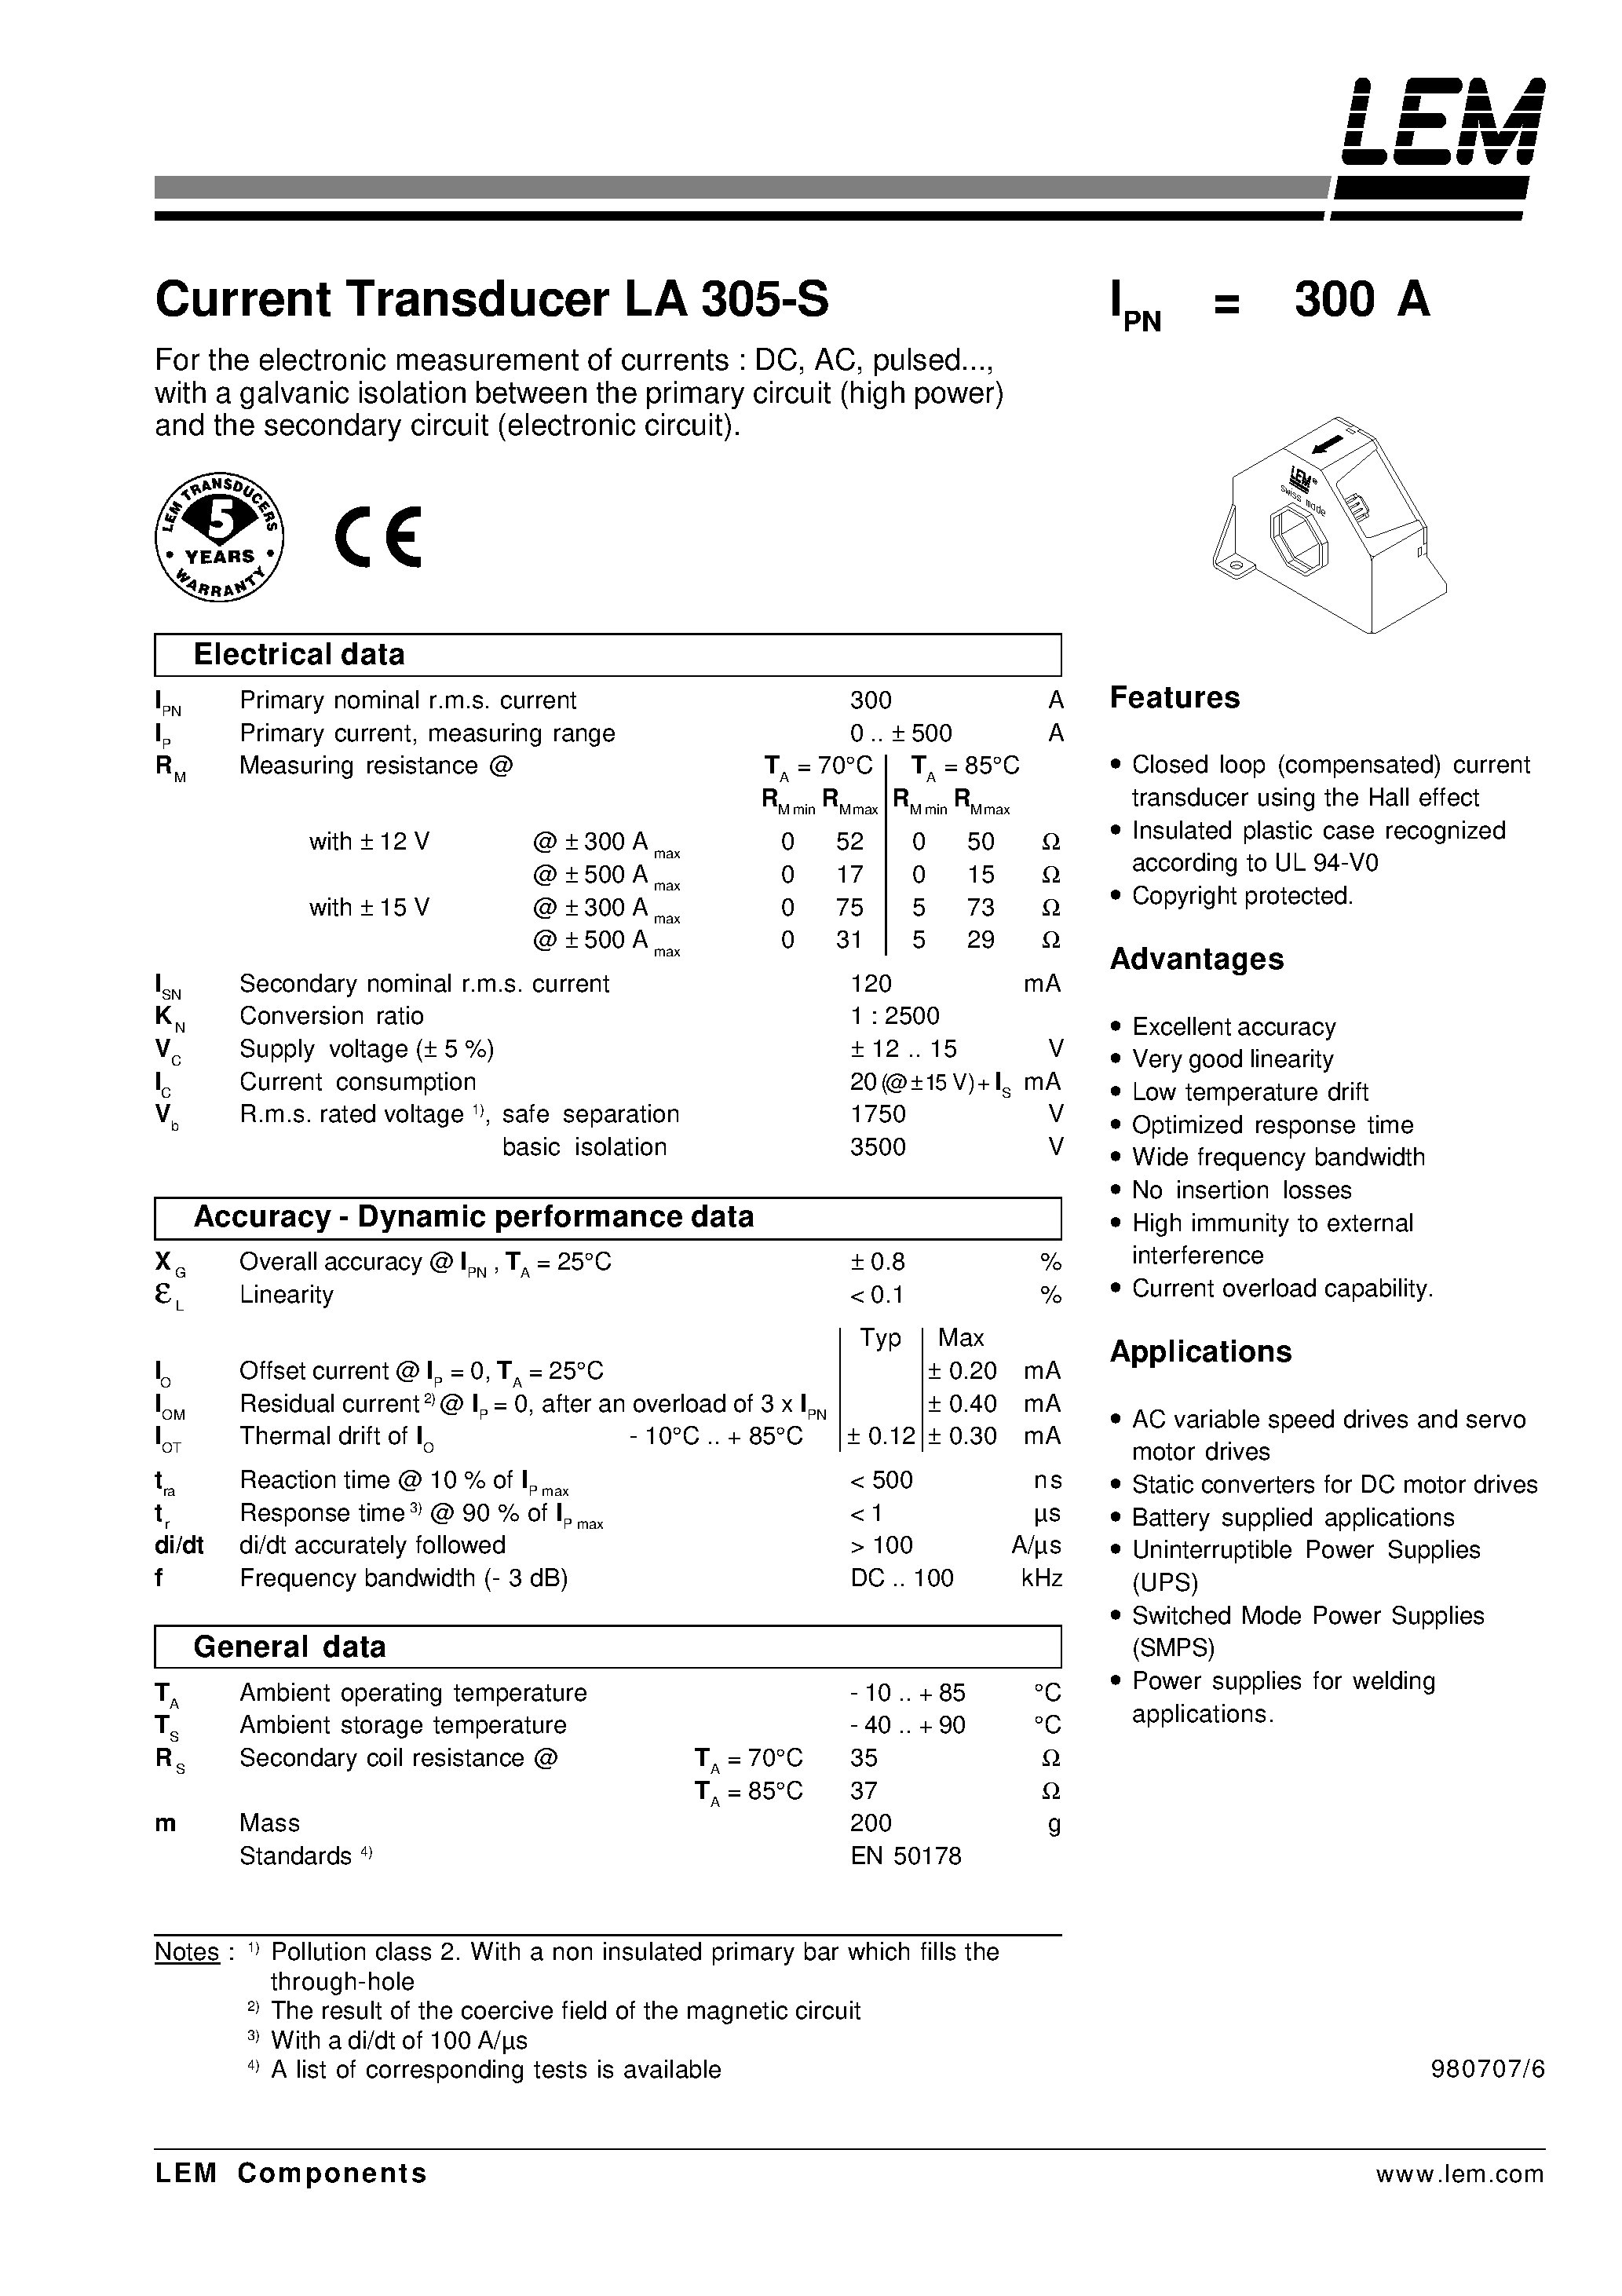 Datasheet LA305-S - Current Transducer LA 305-S page 1